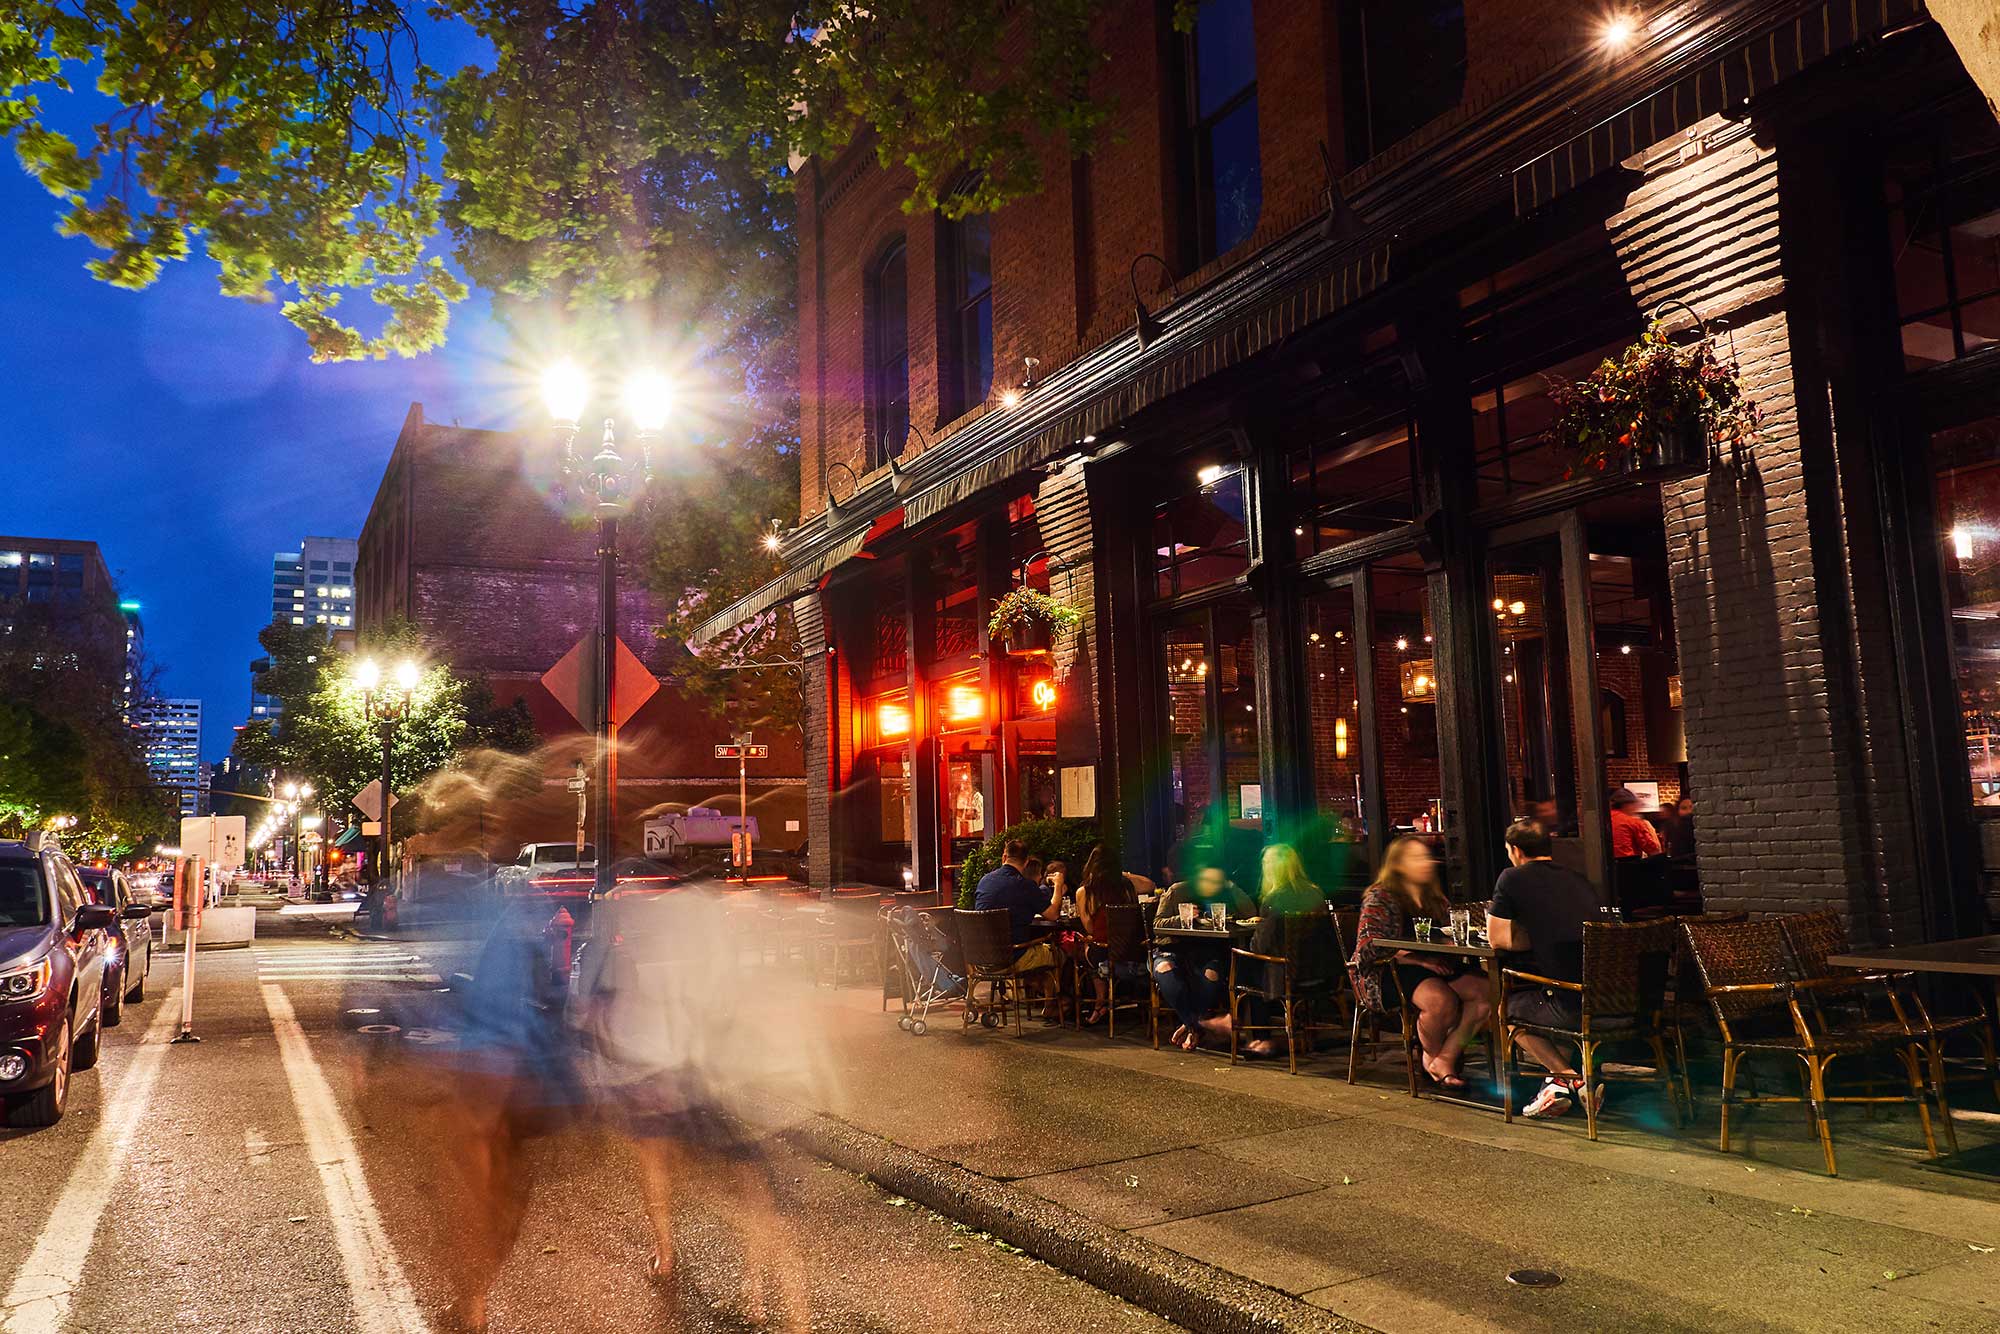 sidewalk view of people enjoying restaurants and the night life